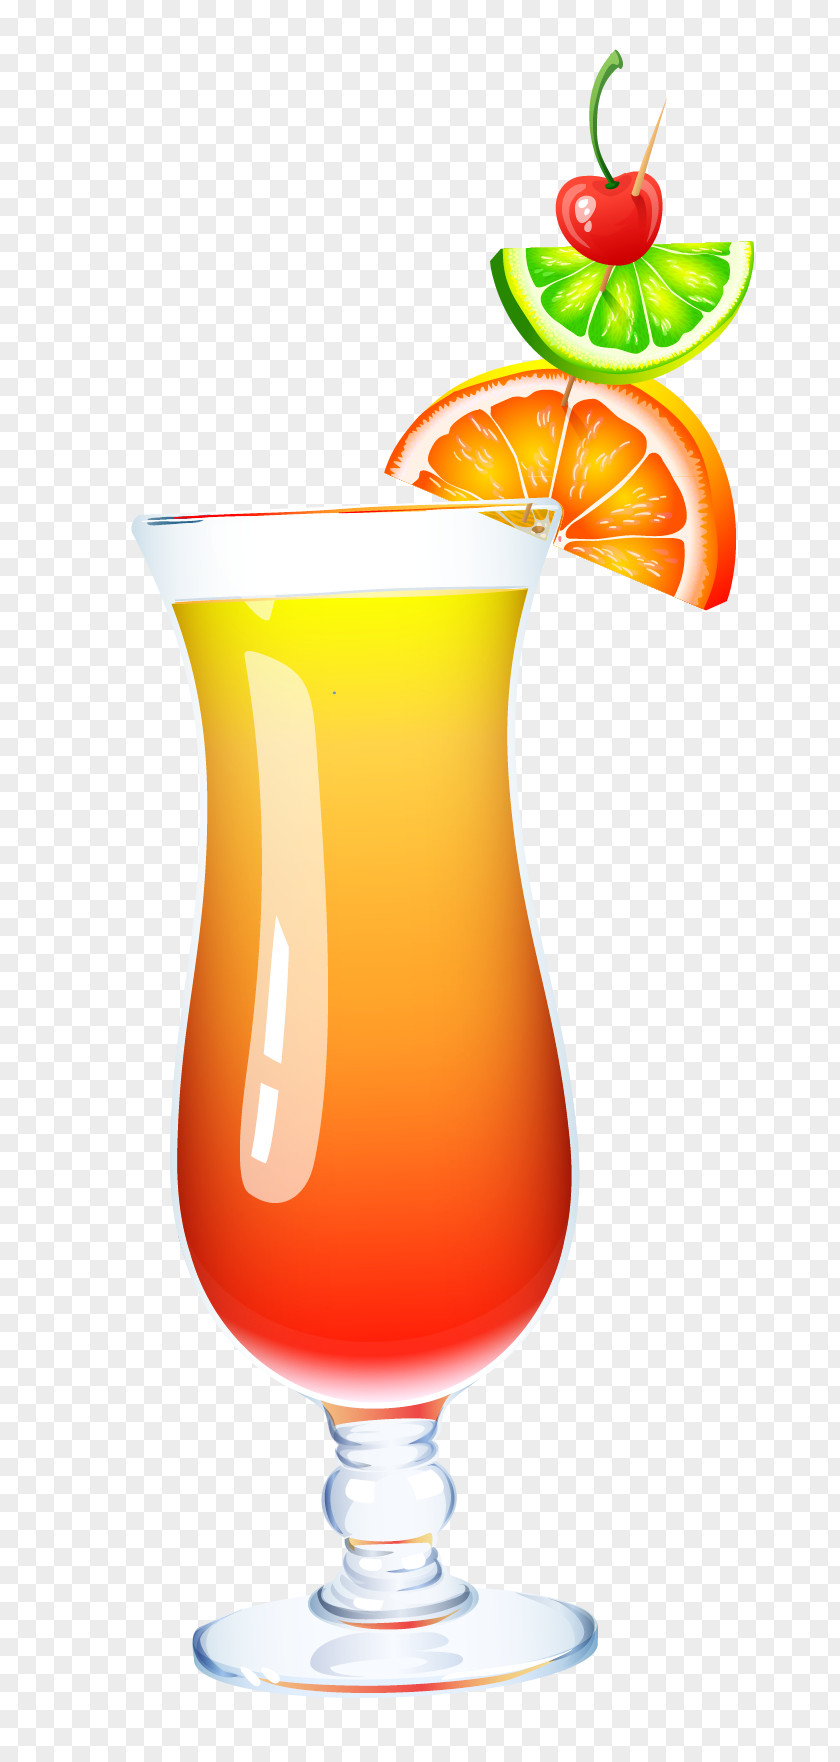 Delicious Orange Juice Cocktail Screwdriver Martini PNG